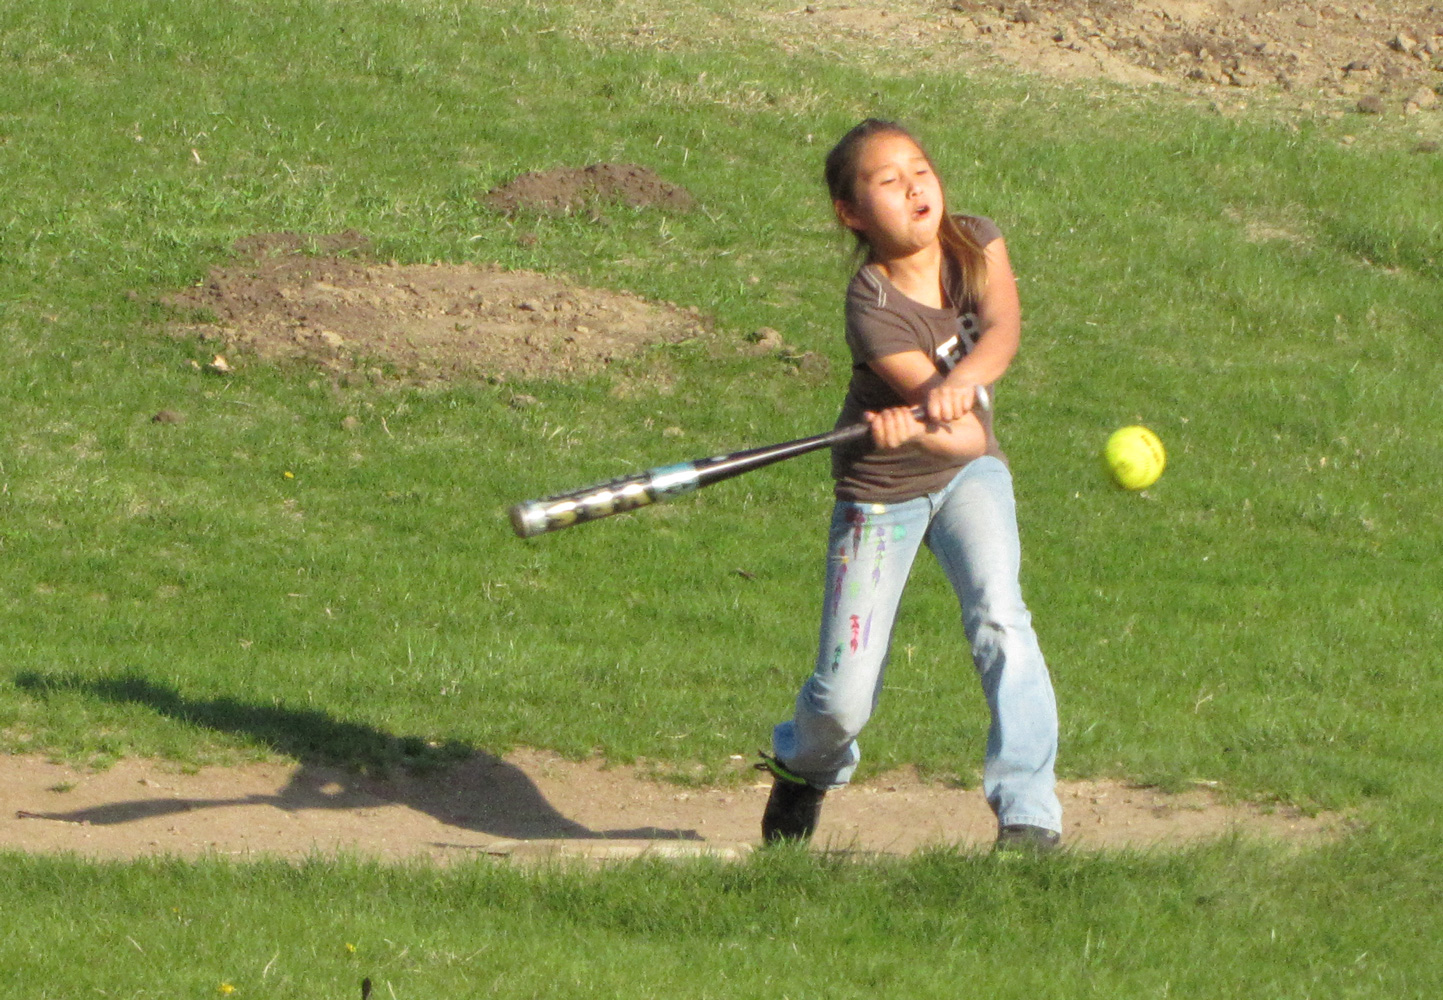 St. Joseph’s students learn basic softball skills – hitting, catching and throwing. 